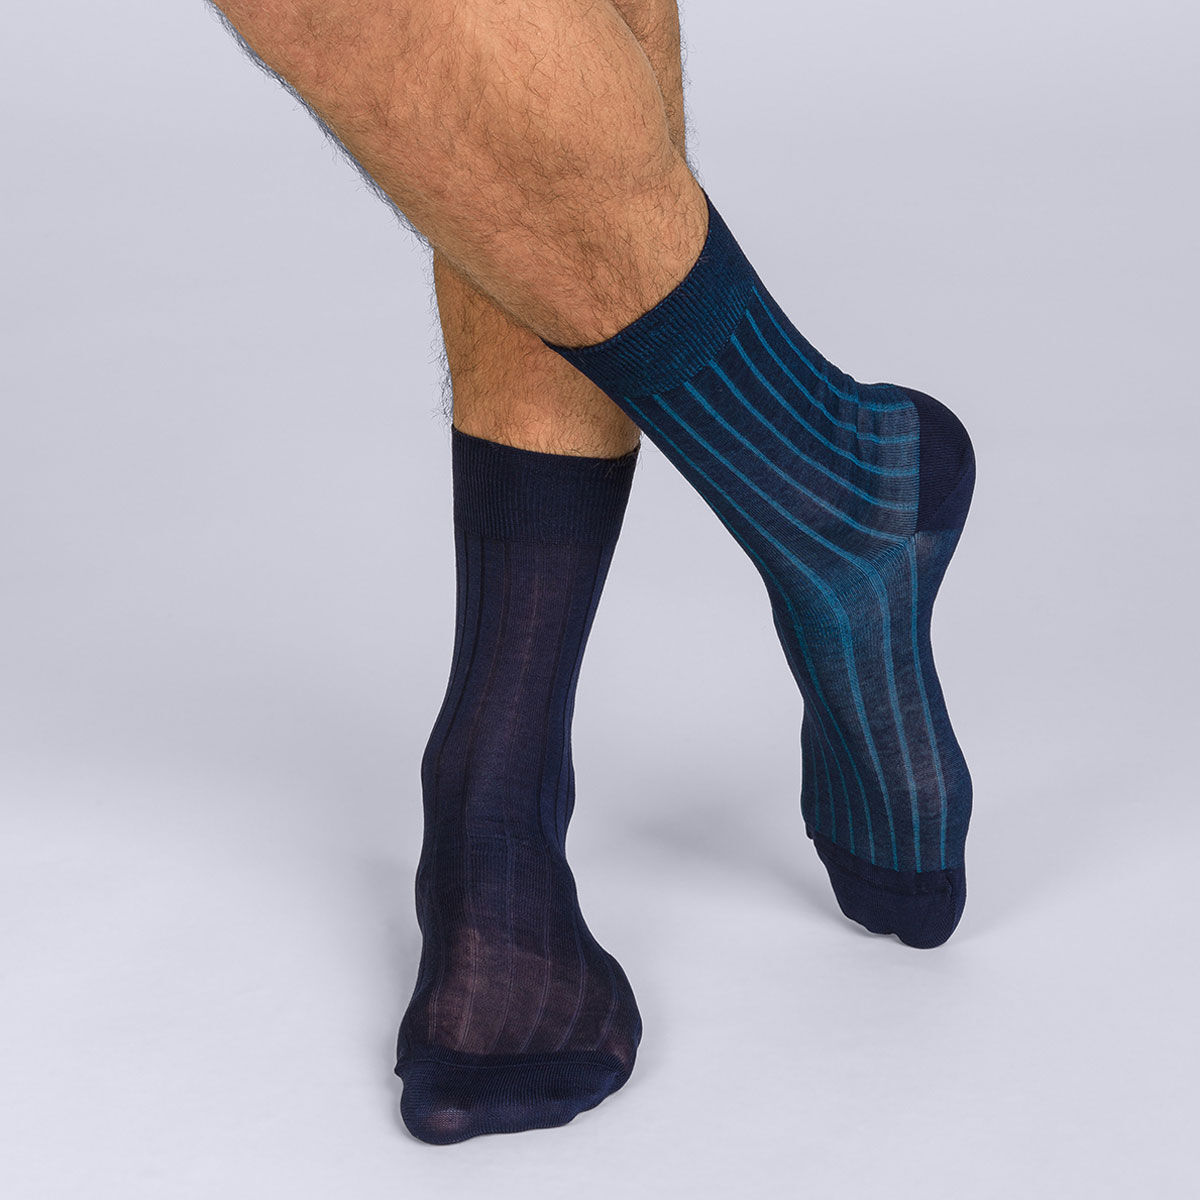 men's mid calf socks